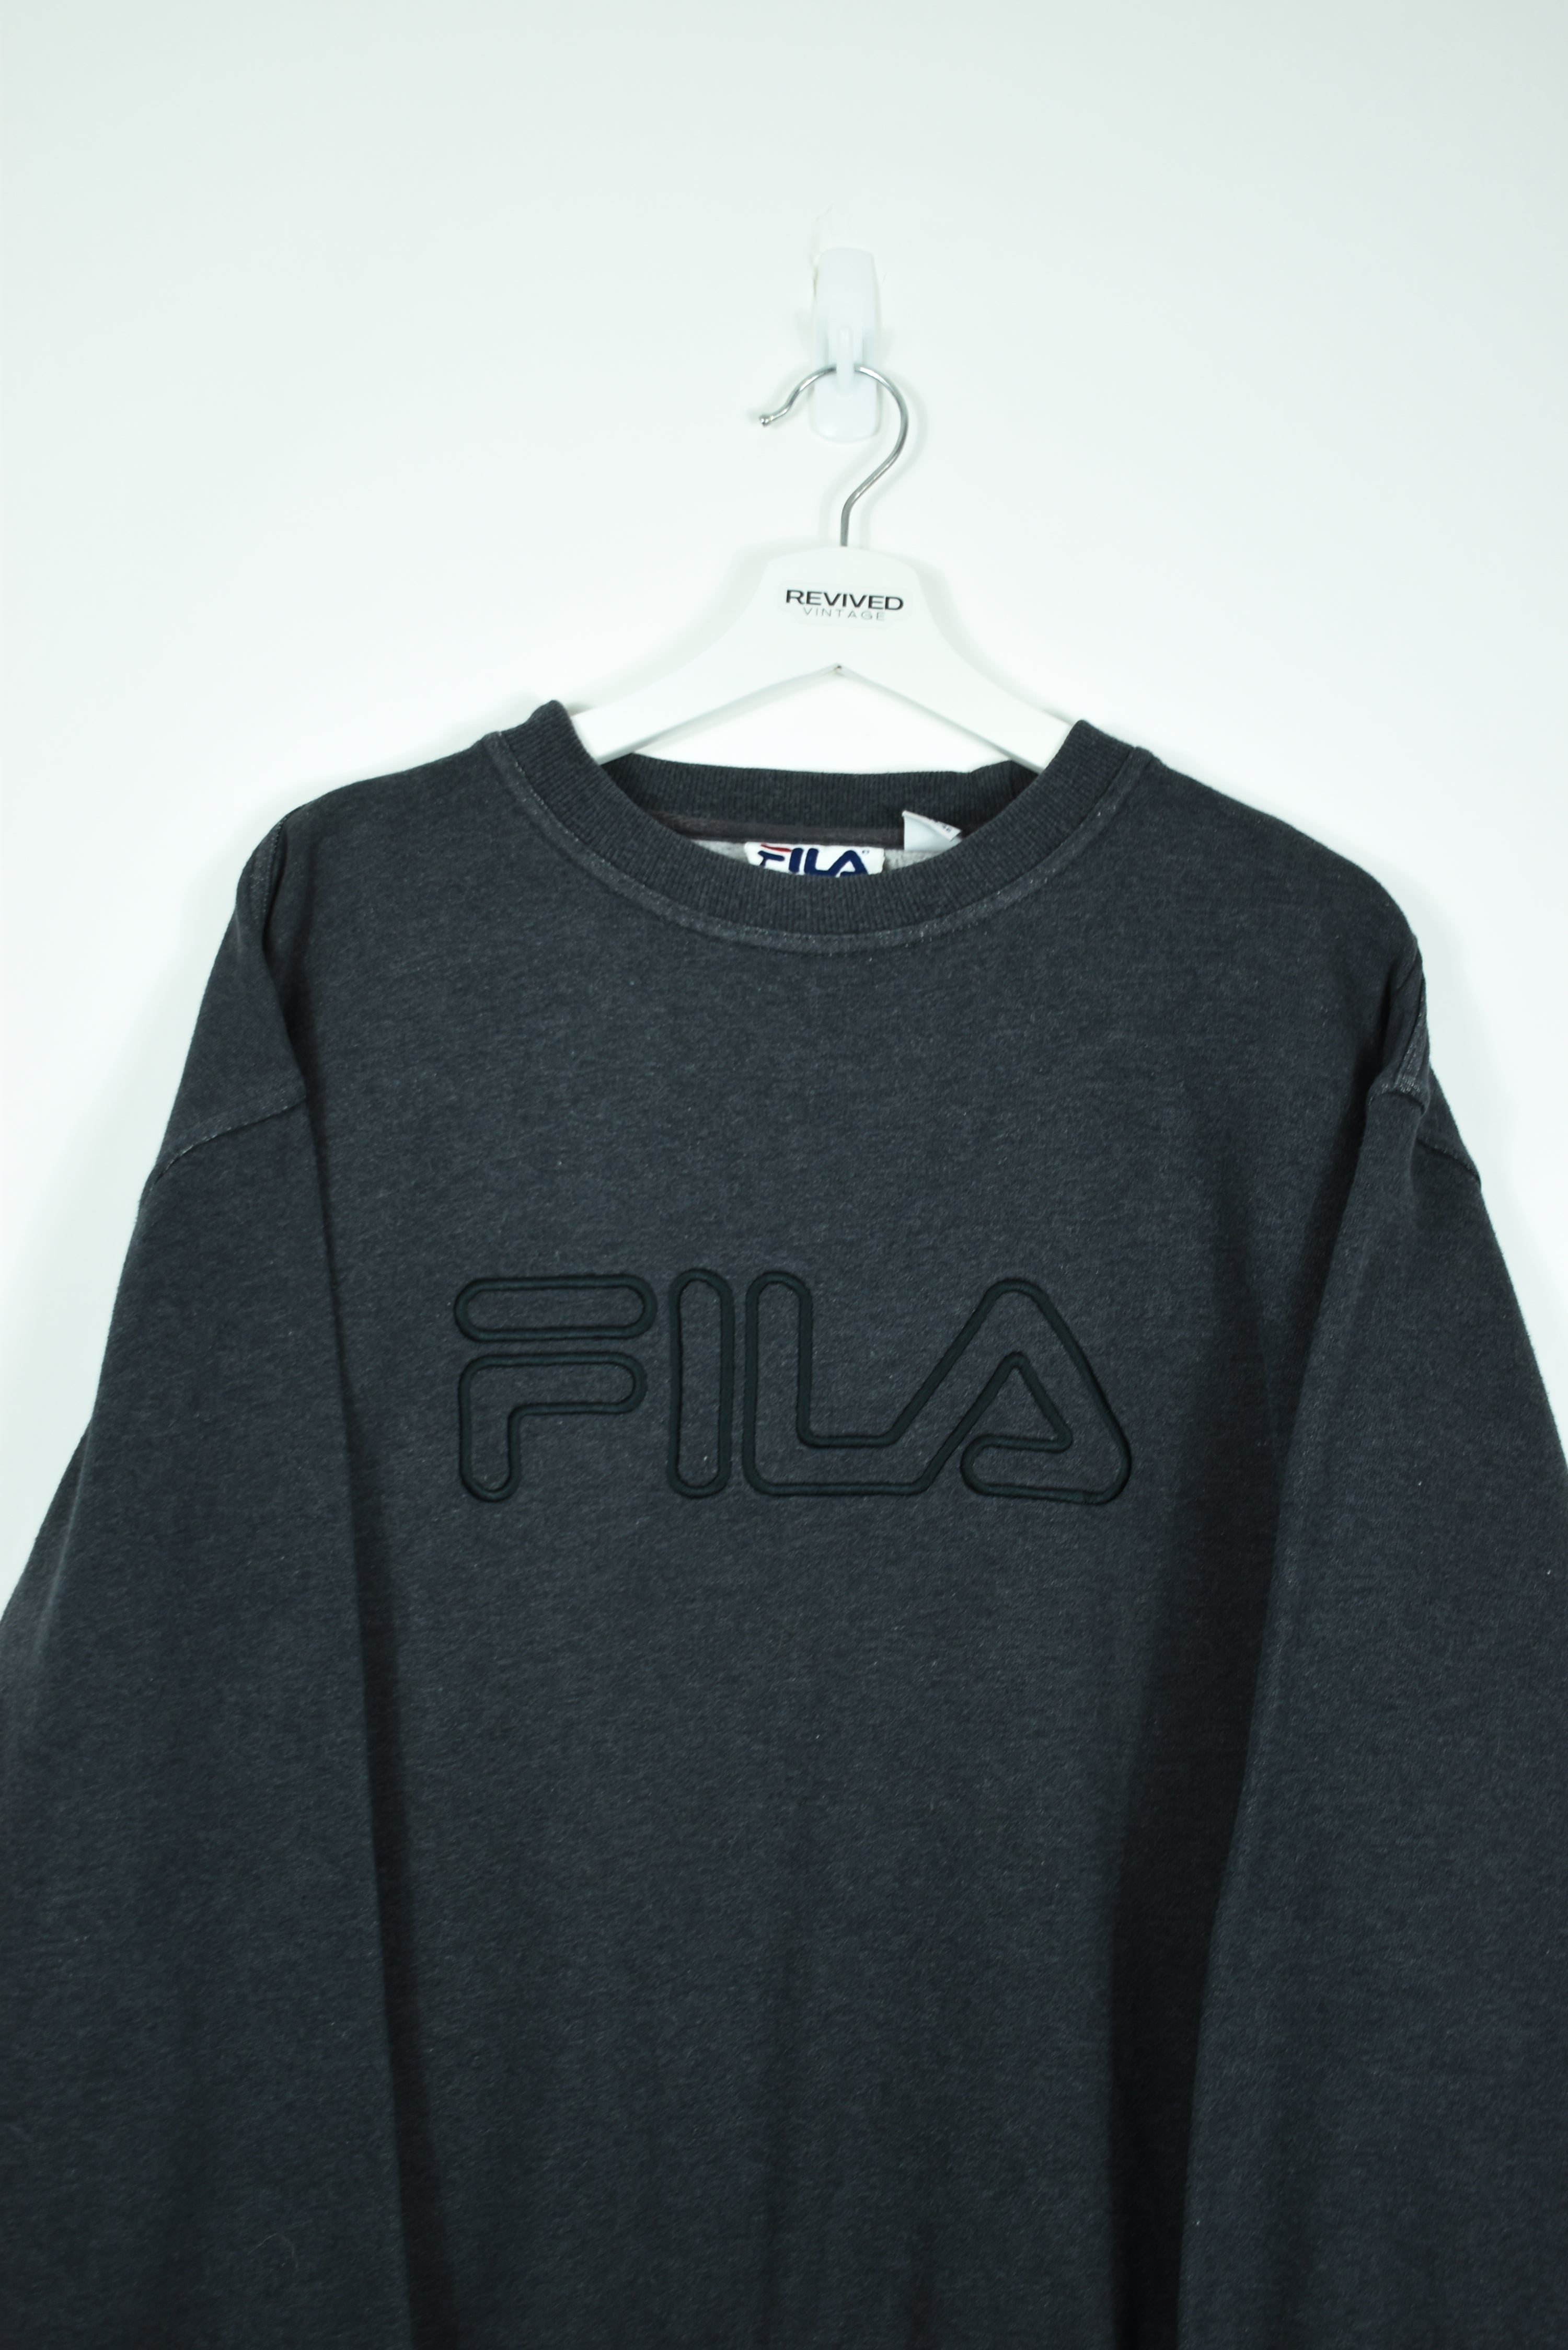 Vintage Fila Embroidered Sweatshirt Dark Grey Large